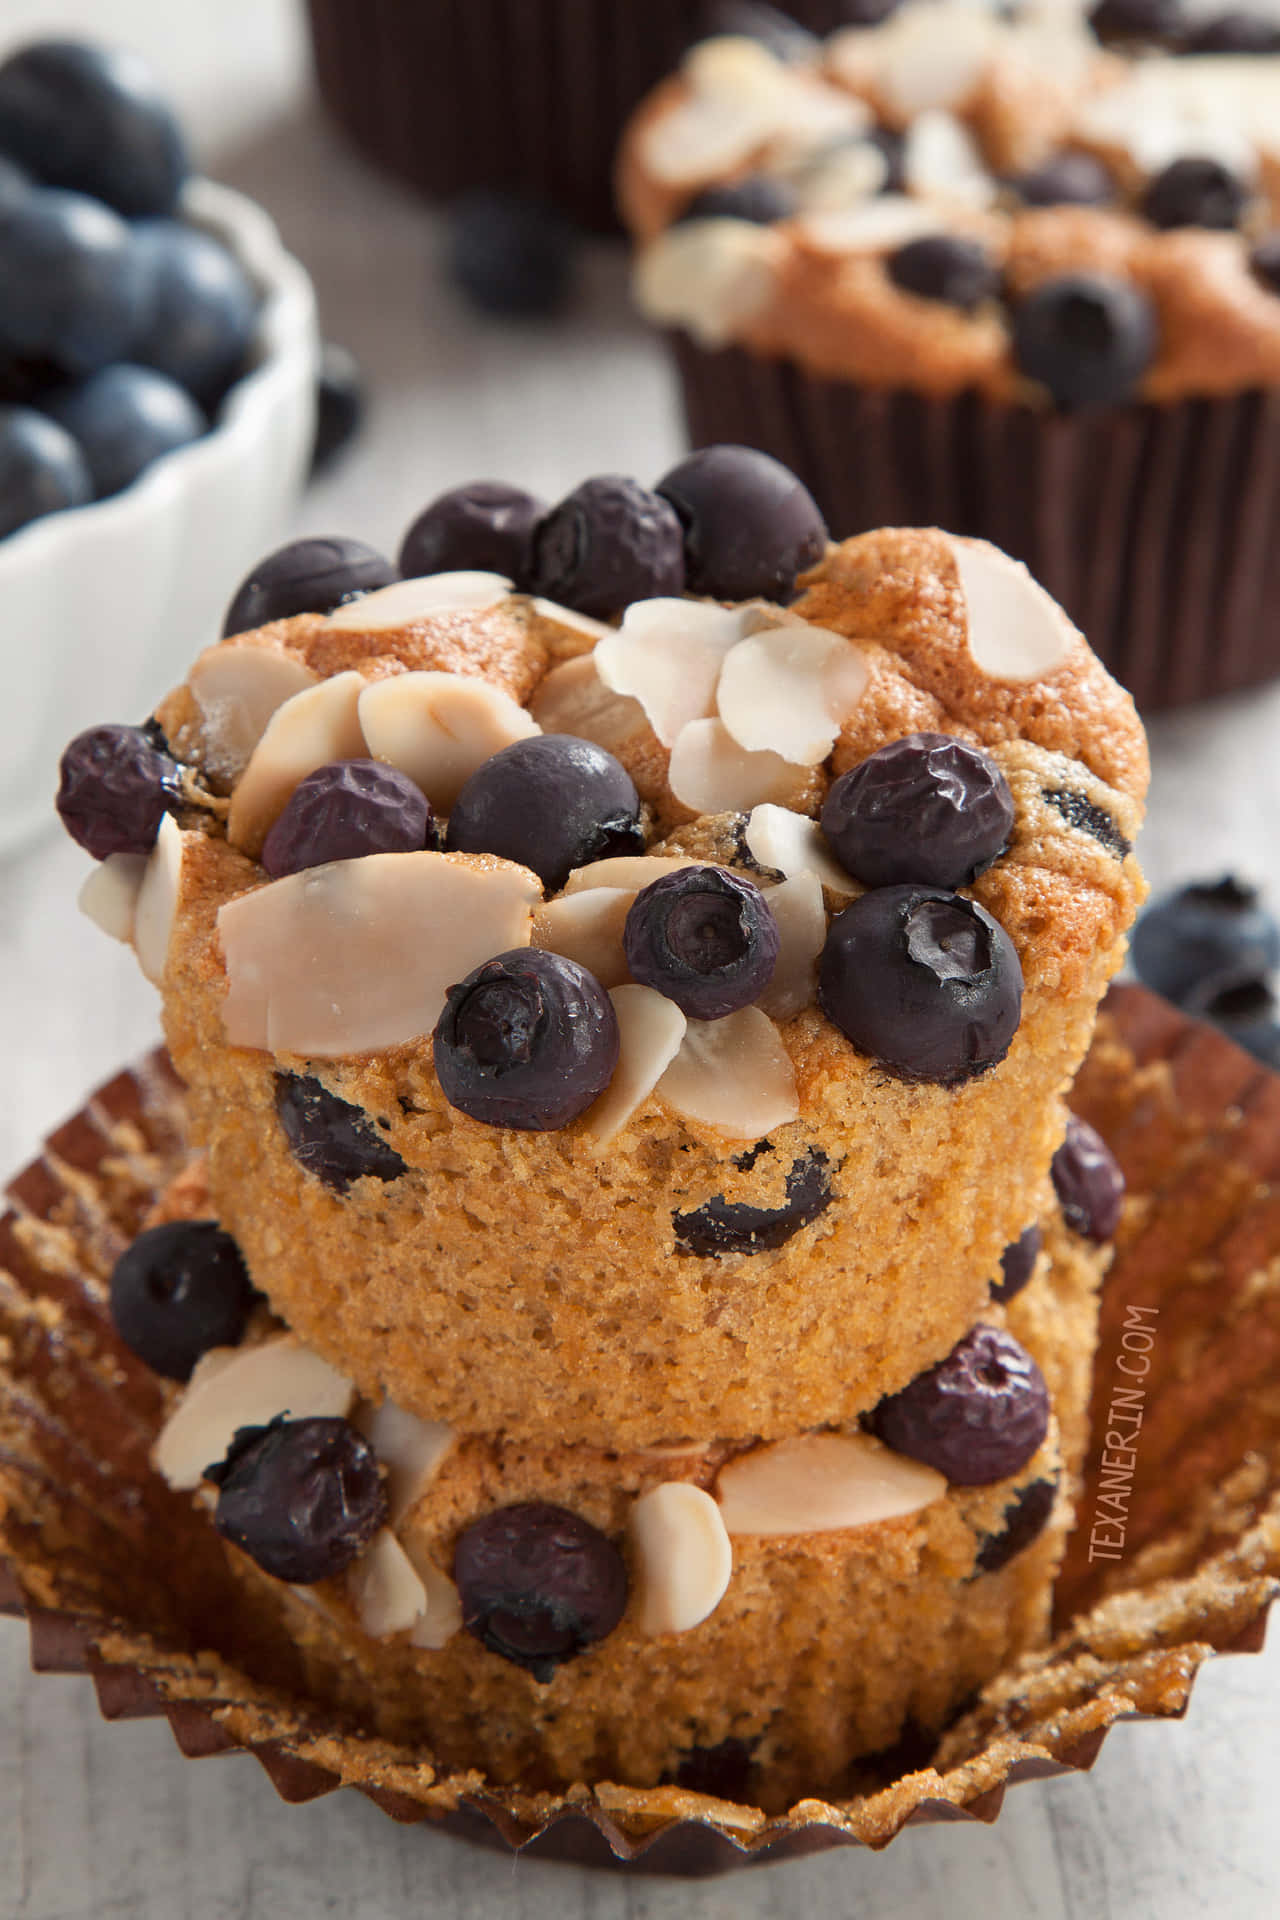 Enjoy some freshly-baked blueberry muffins! Wallpaper